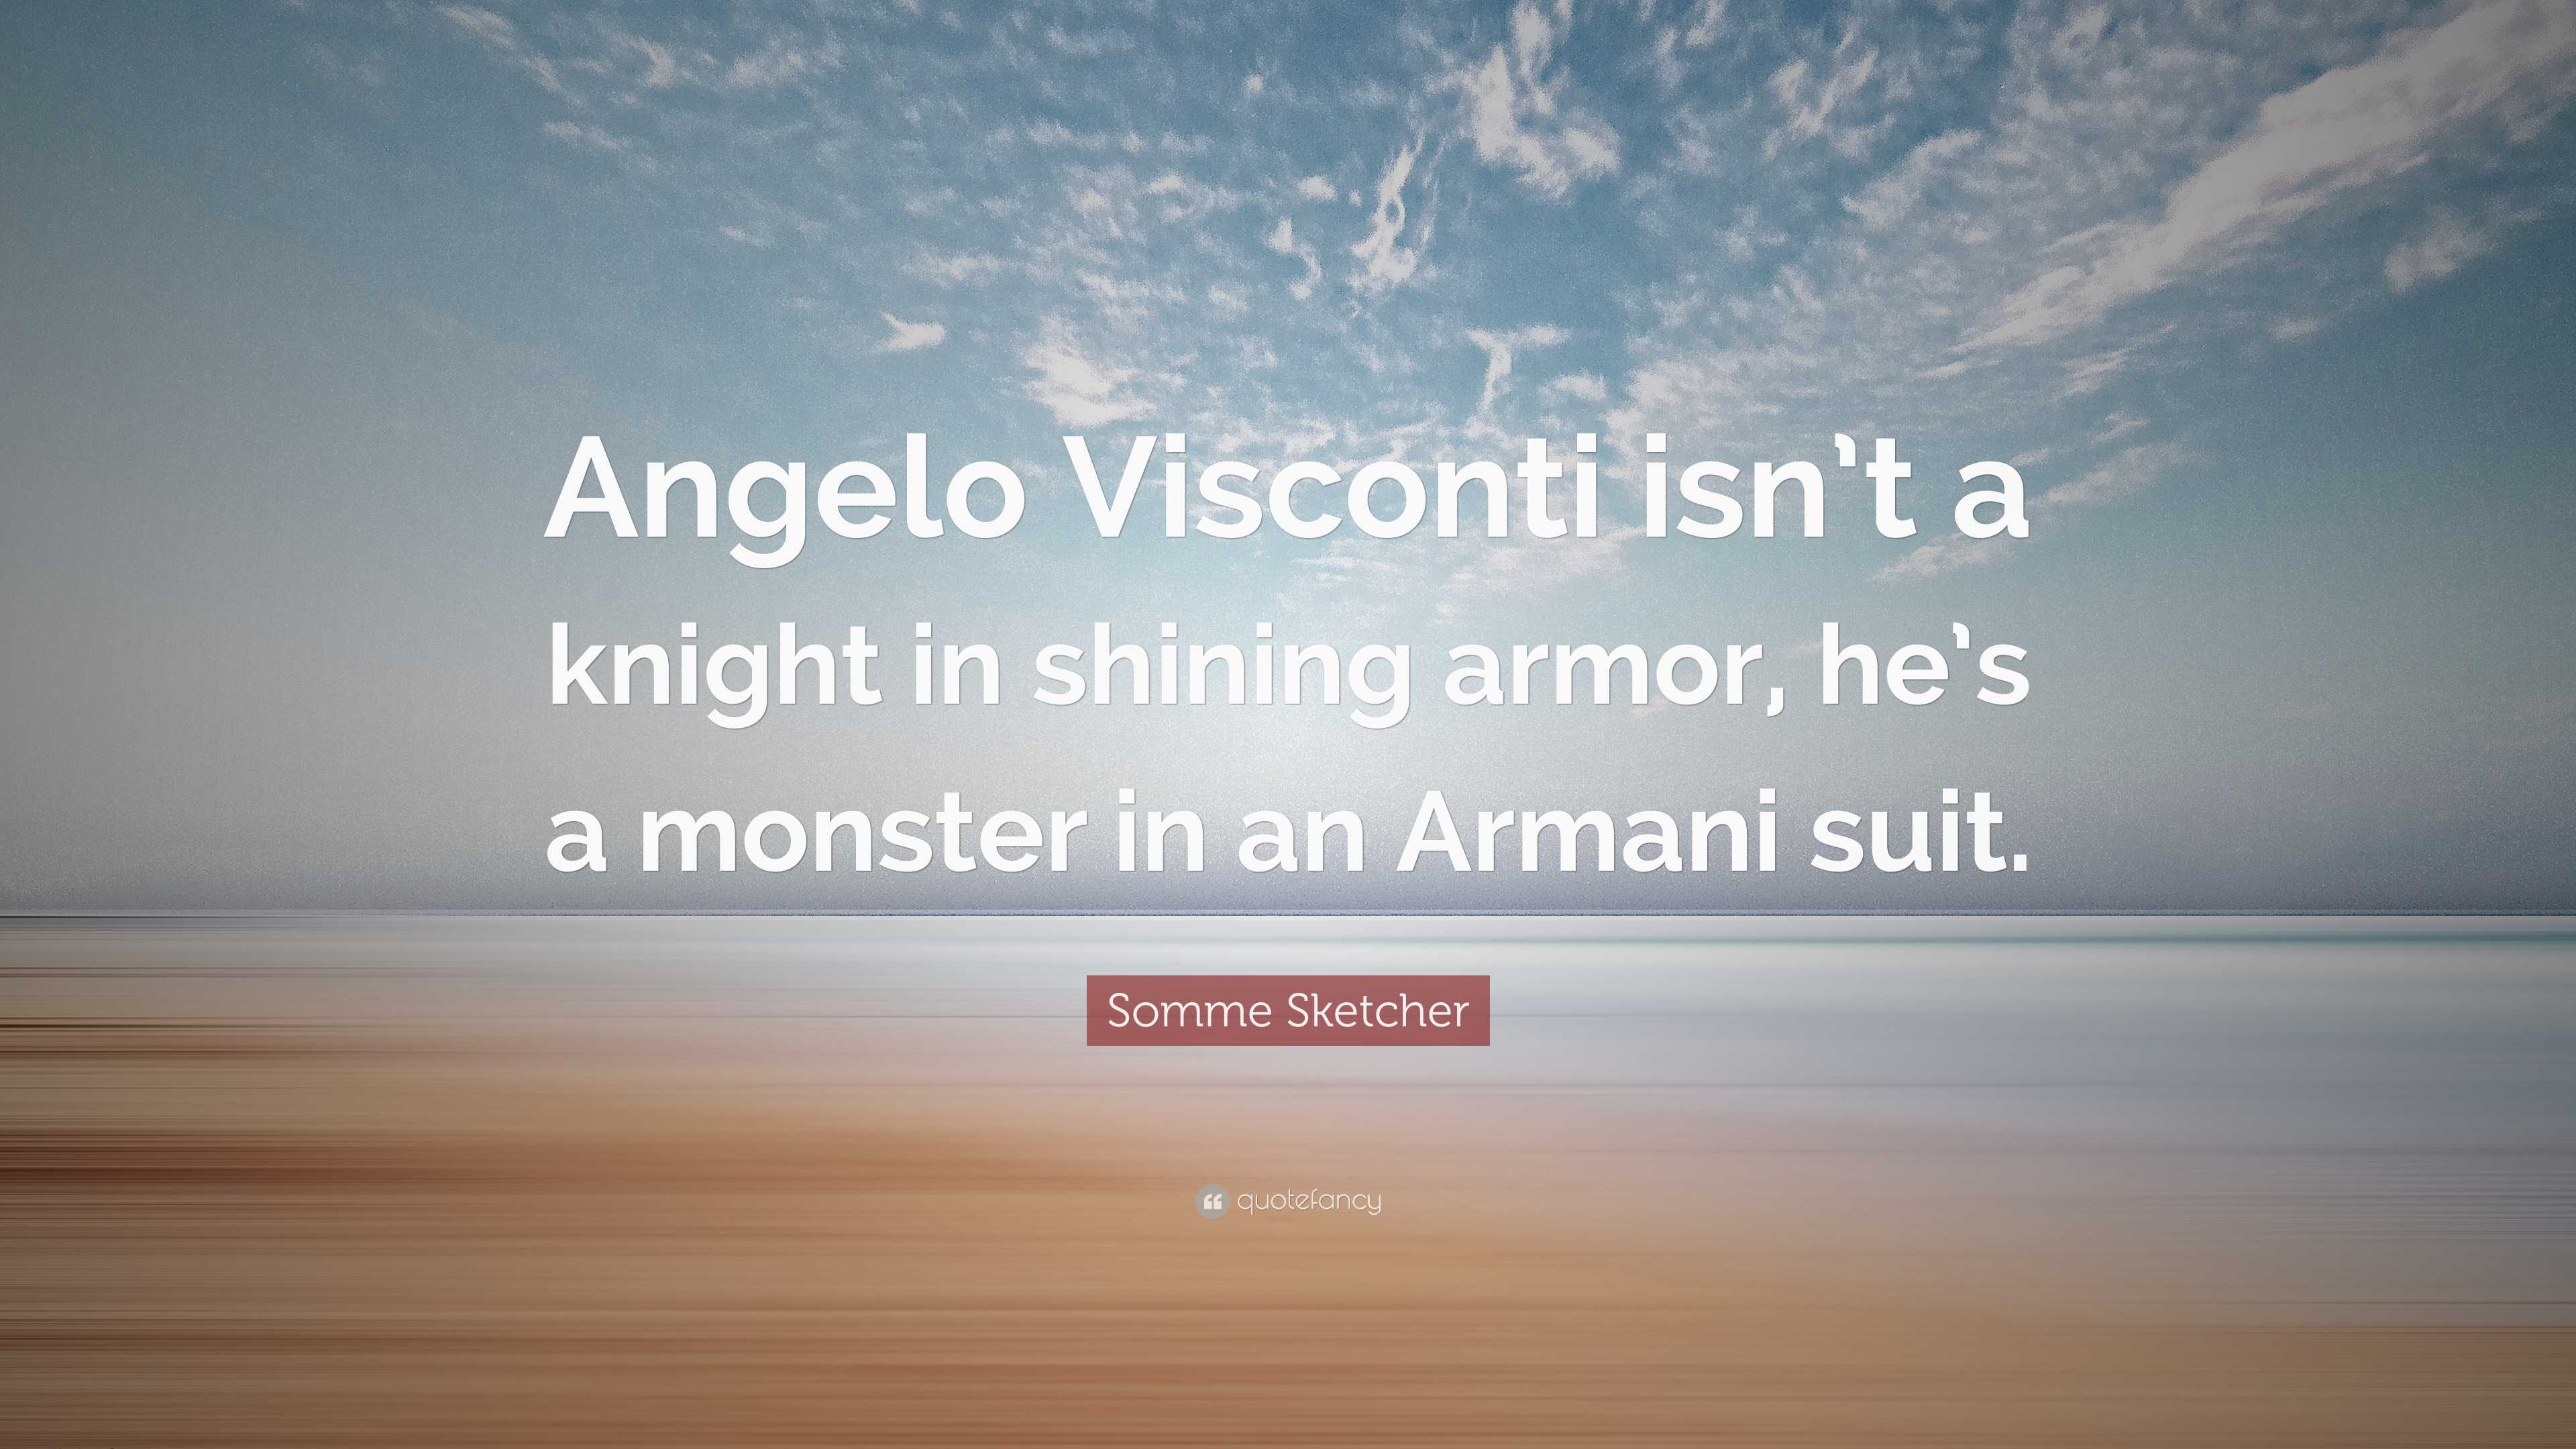 Best of Knight in shining armani